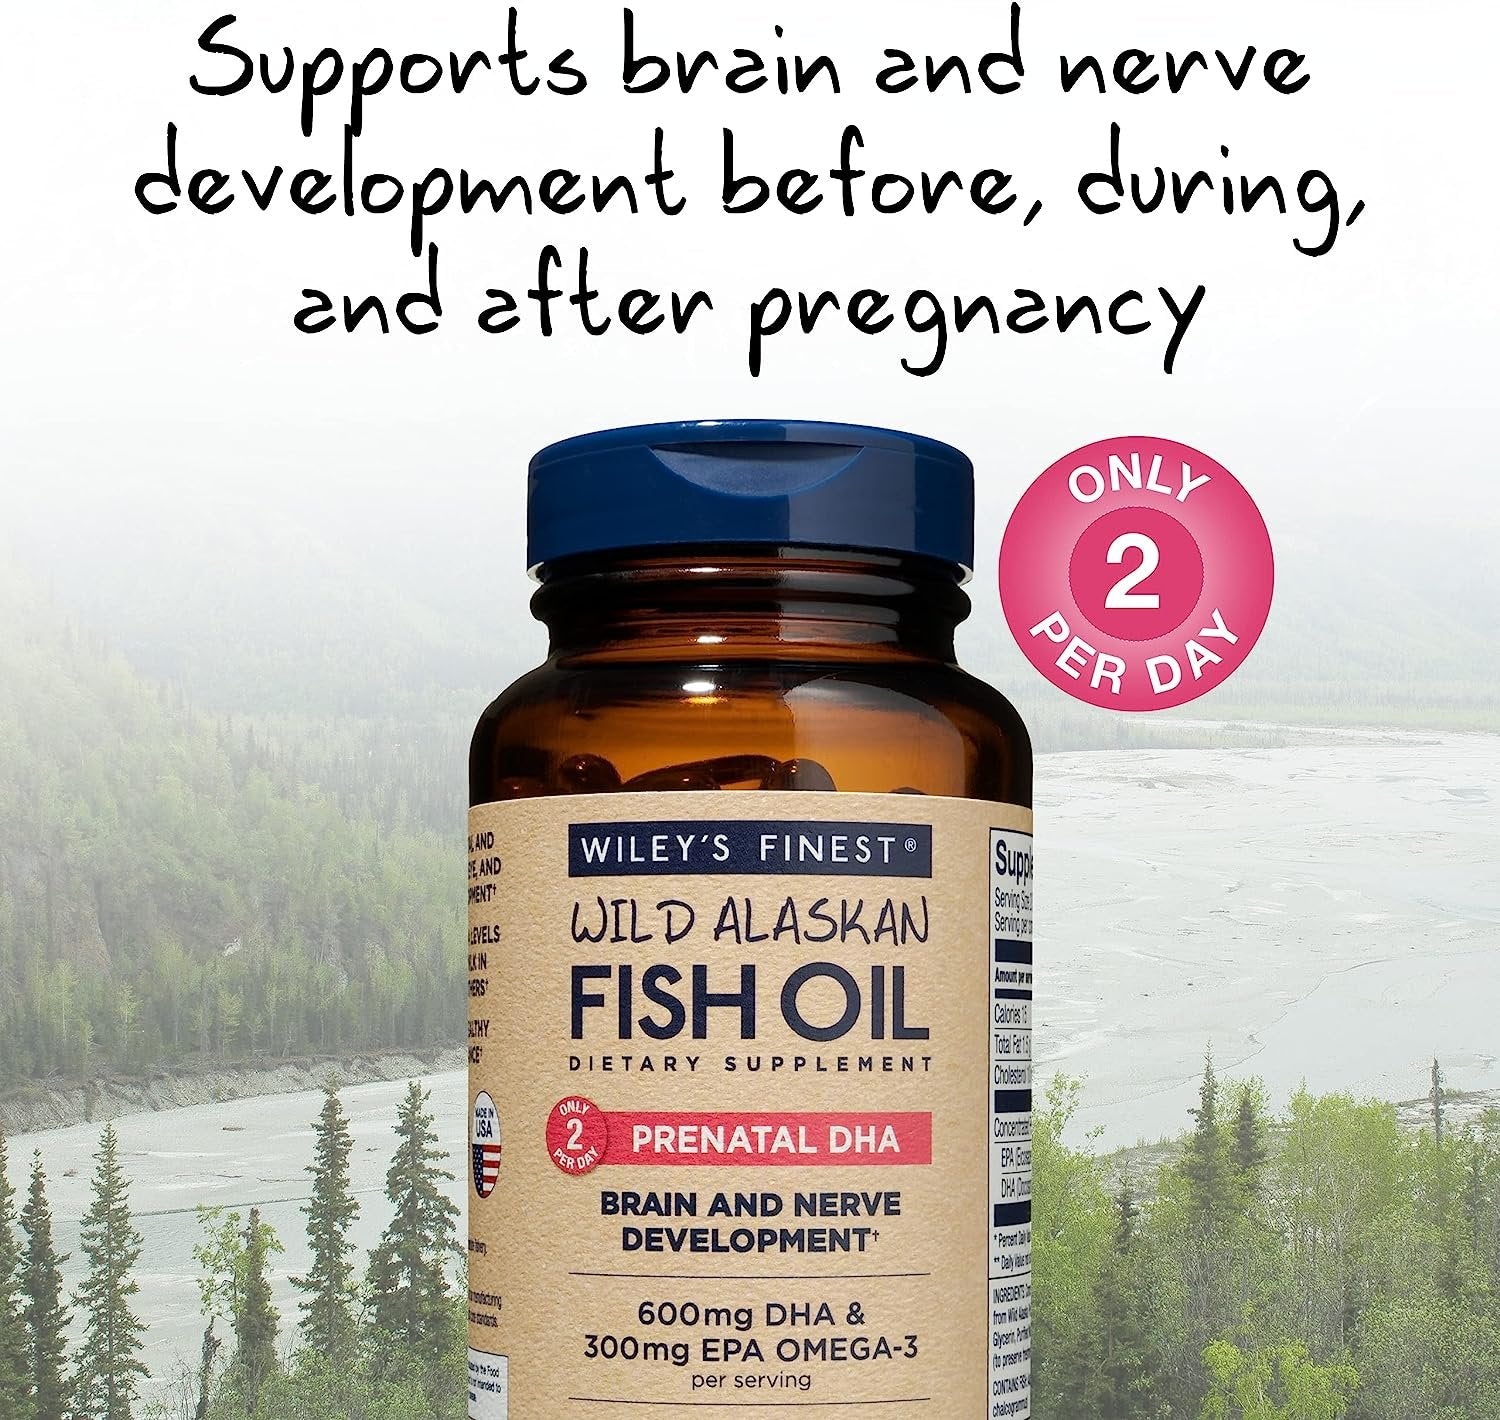 Wiley's Finest Wild Alaskan Fish Oil Prenatal DHA - 600mg DHA Omega-3s - 180 Softgels (90 Prenatal Vitamin Servings)